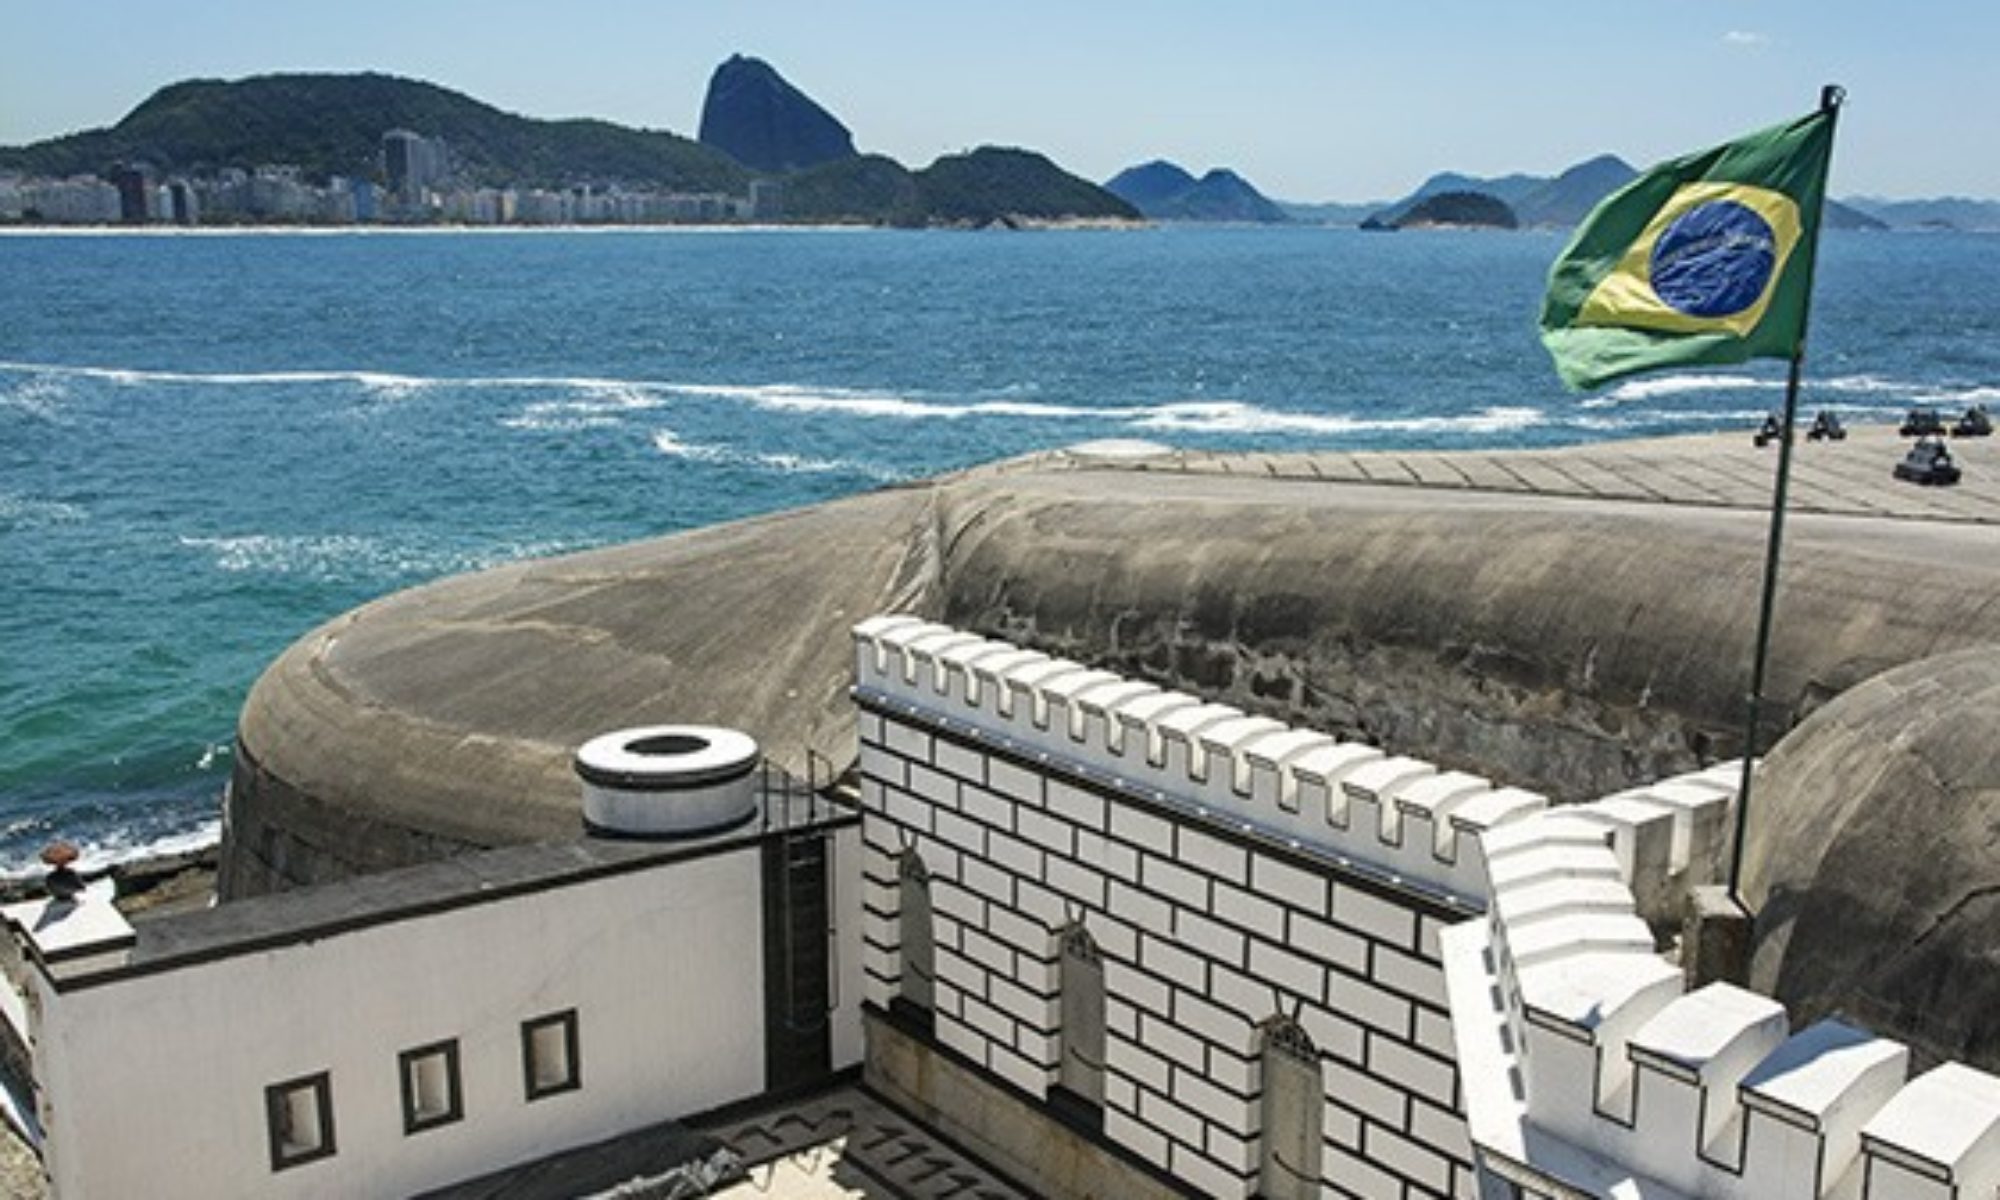 Forte de Copacabana